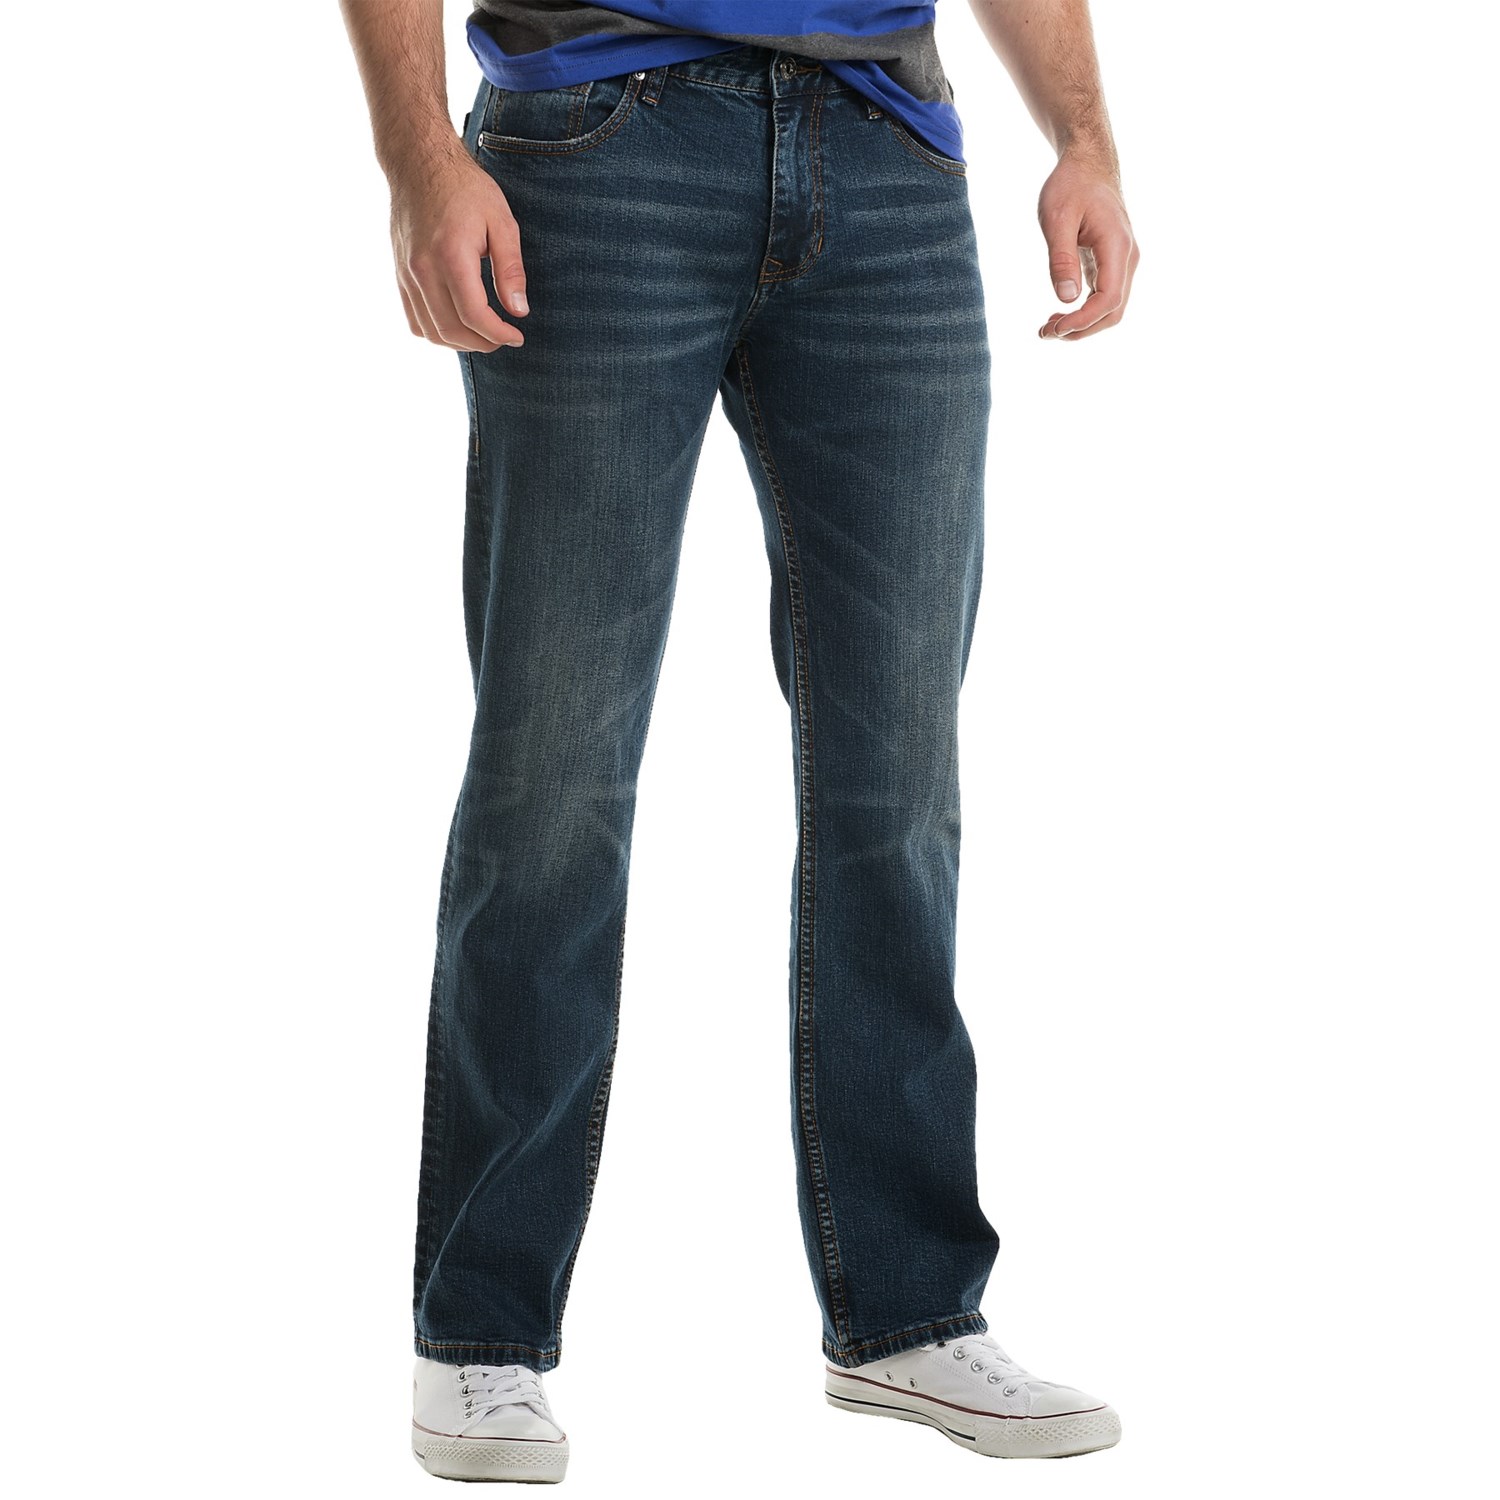 Slate Denim & Co. Coltrane Classic Jeans (For Men) - Save 77%